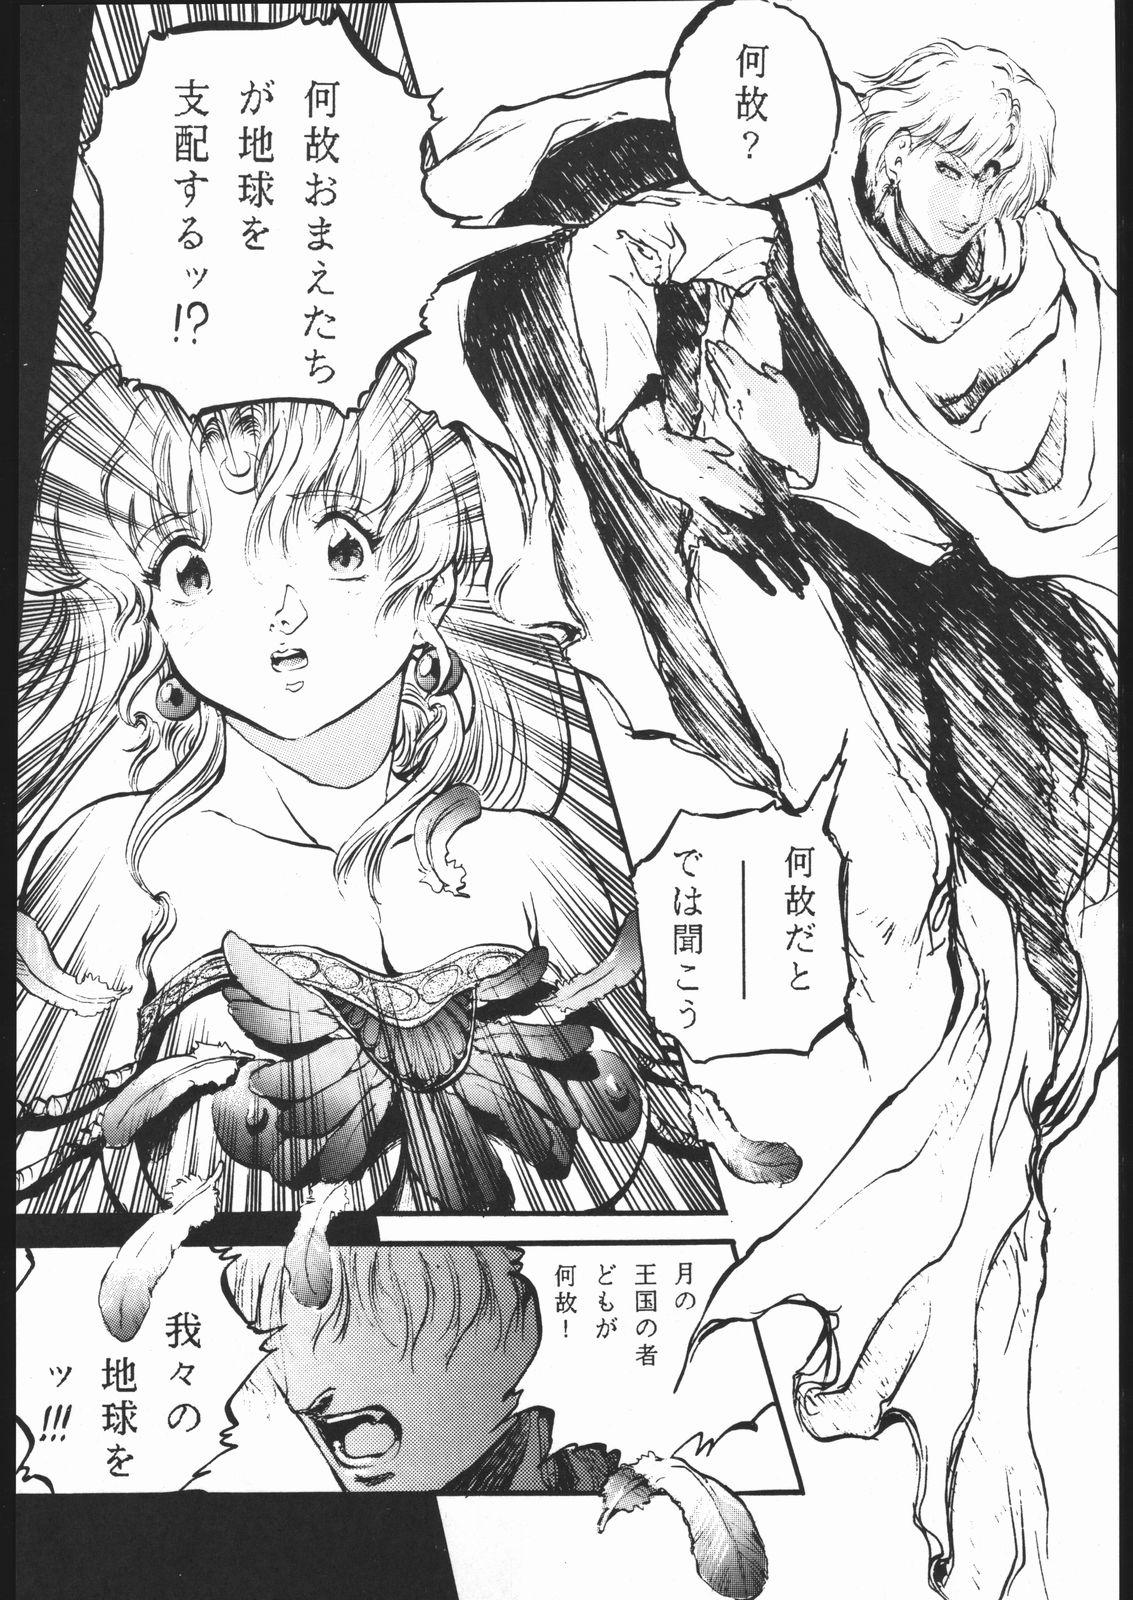 Babysitter KATZE 8 - Sailor moon Tenchi muyo Ghost sweeper mikami Giant robo Victory gundam Slut - Page 7